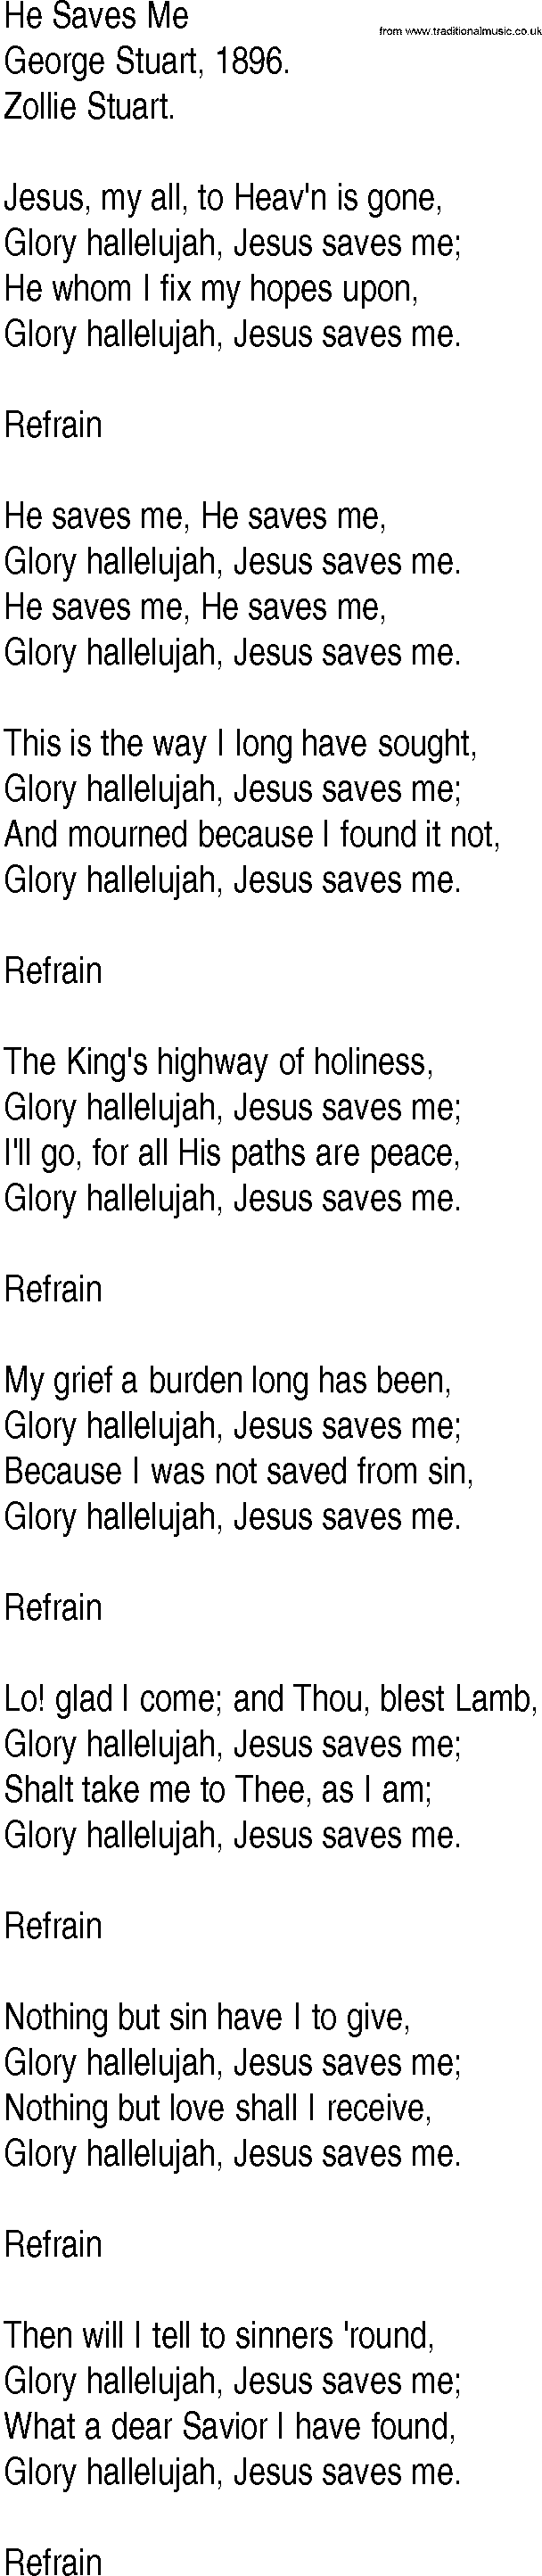 Hymn and Gospel Song: He Saves Me by George Stuart lyrics